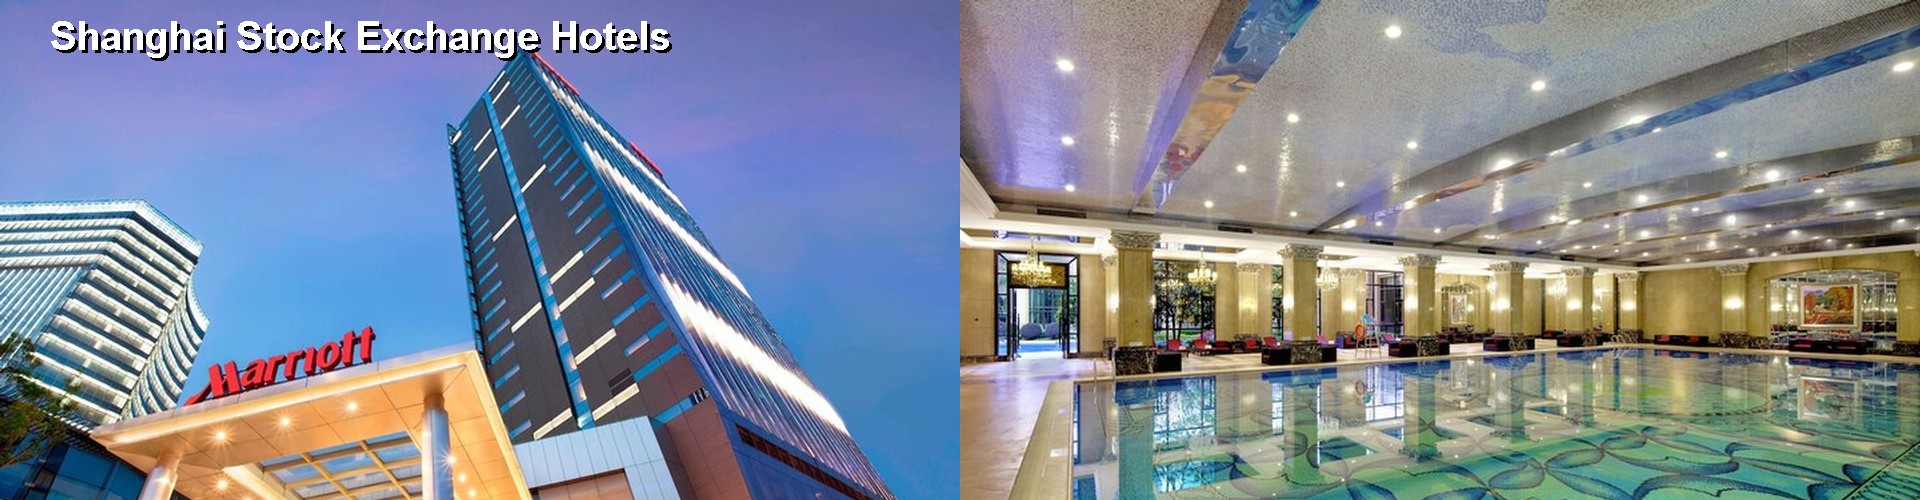 5 Best Hotels near Shanghai Stock Exchange